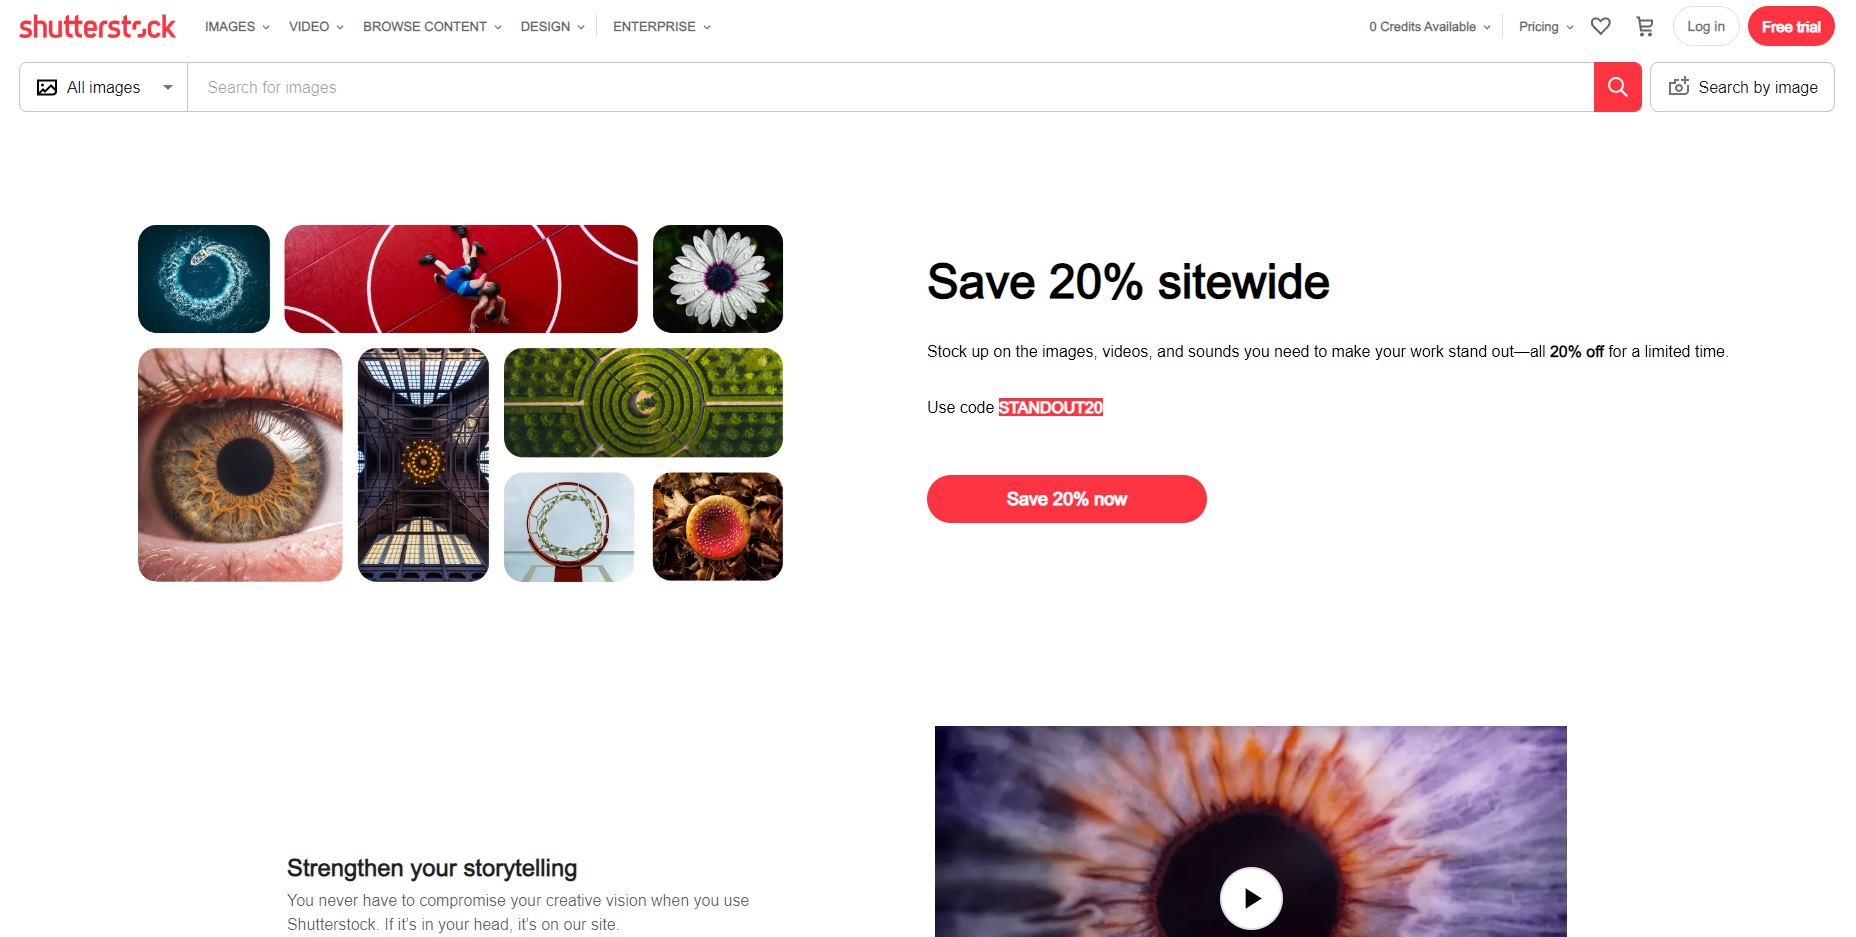 Shutterstock landing page